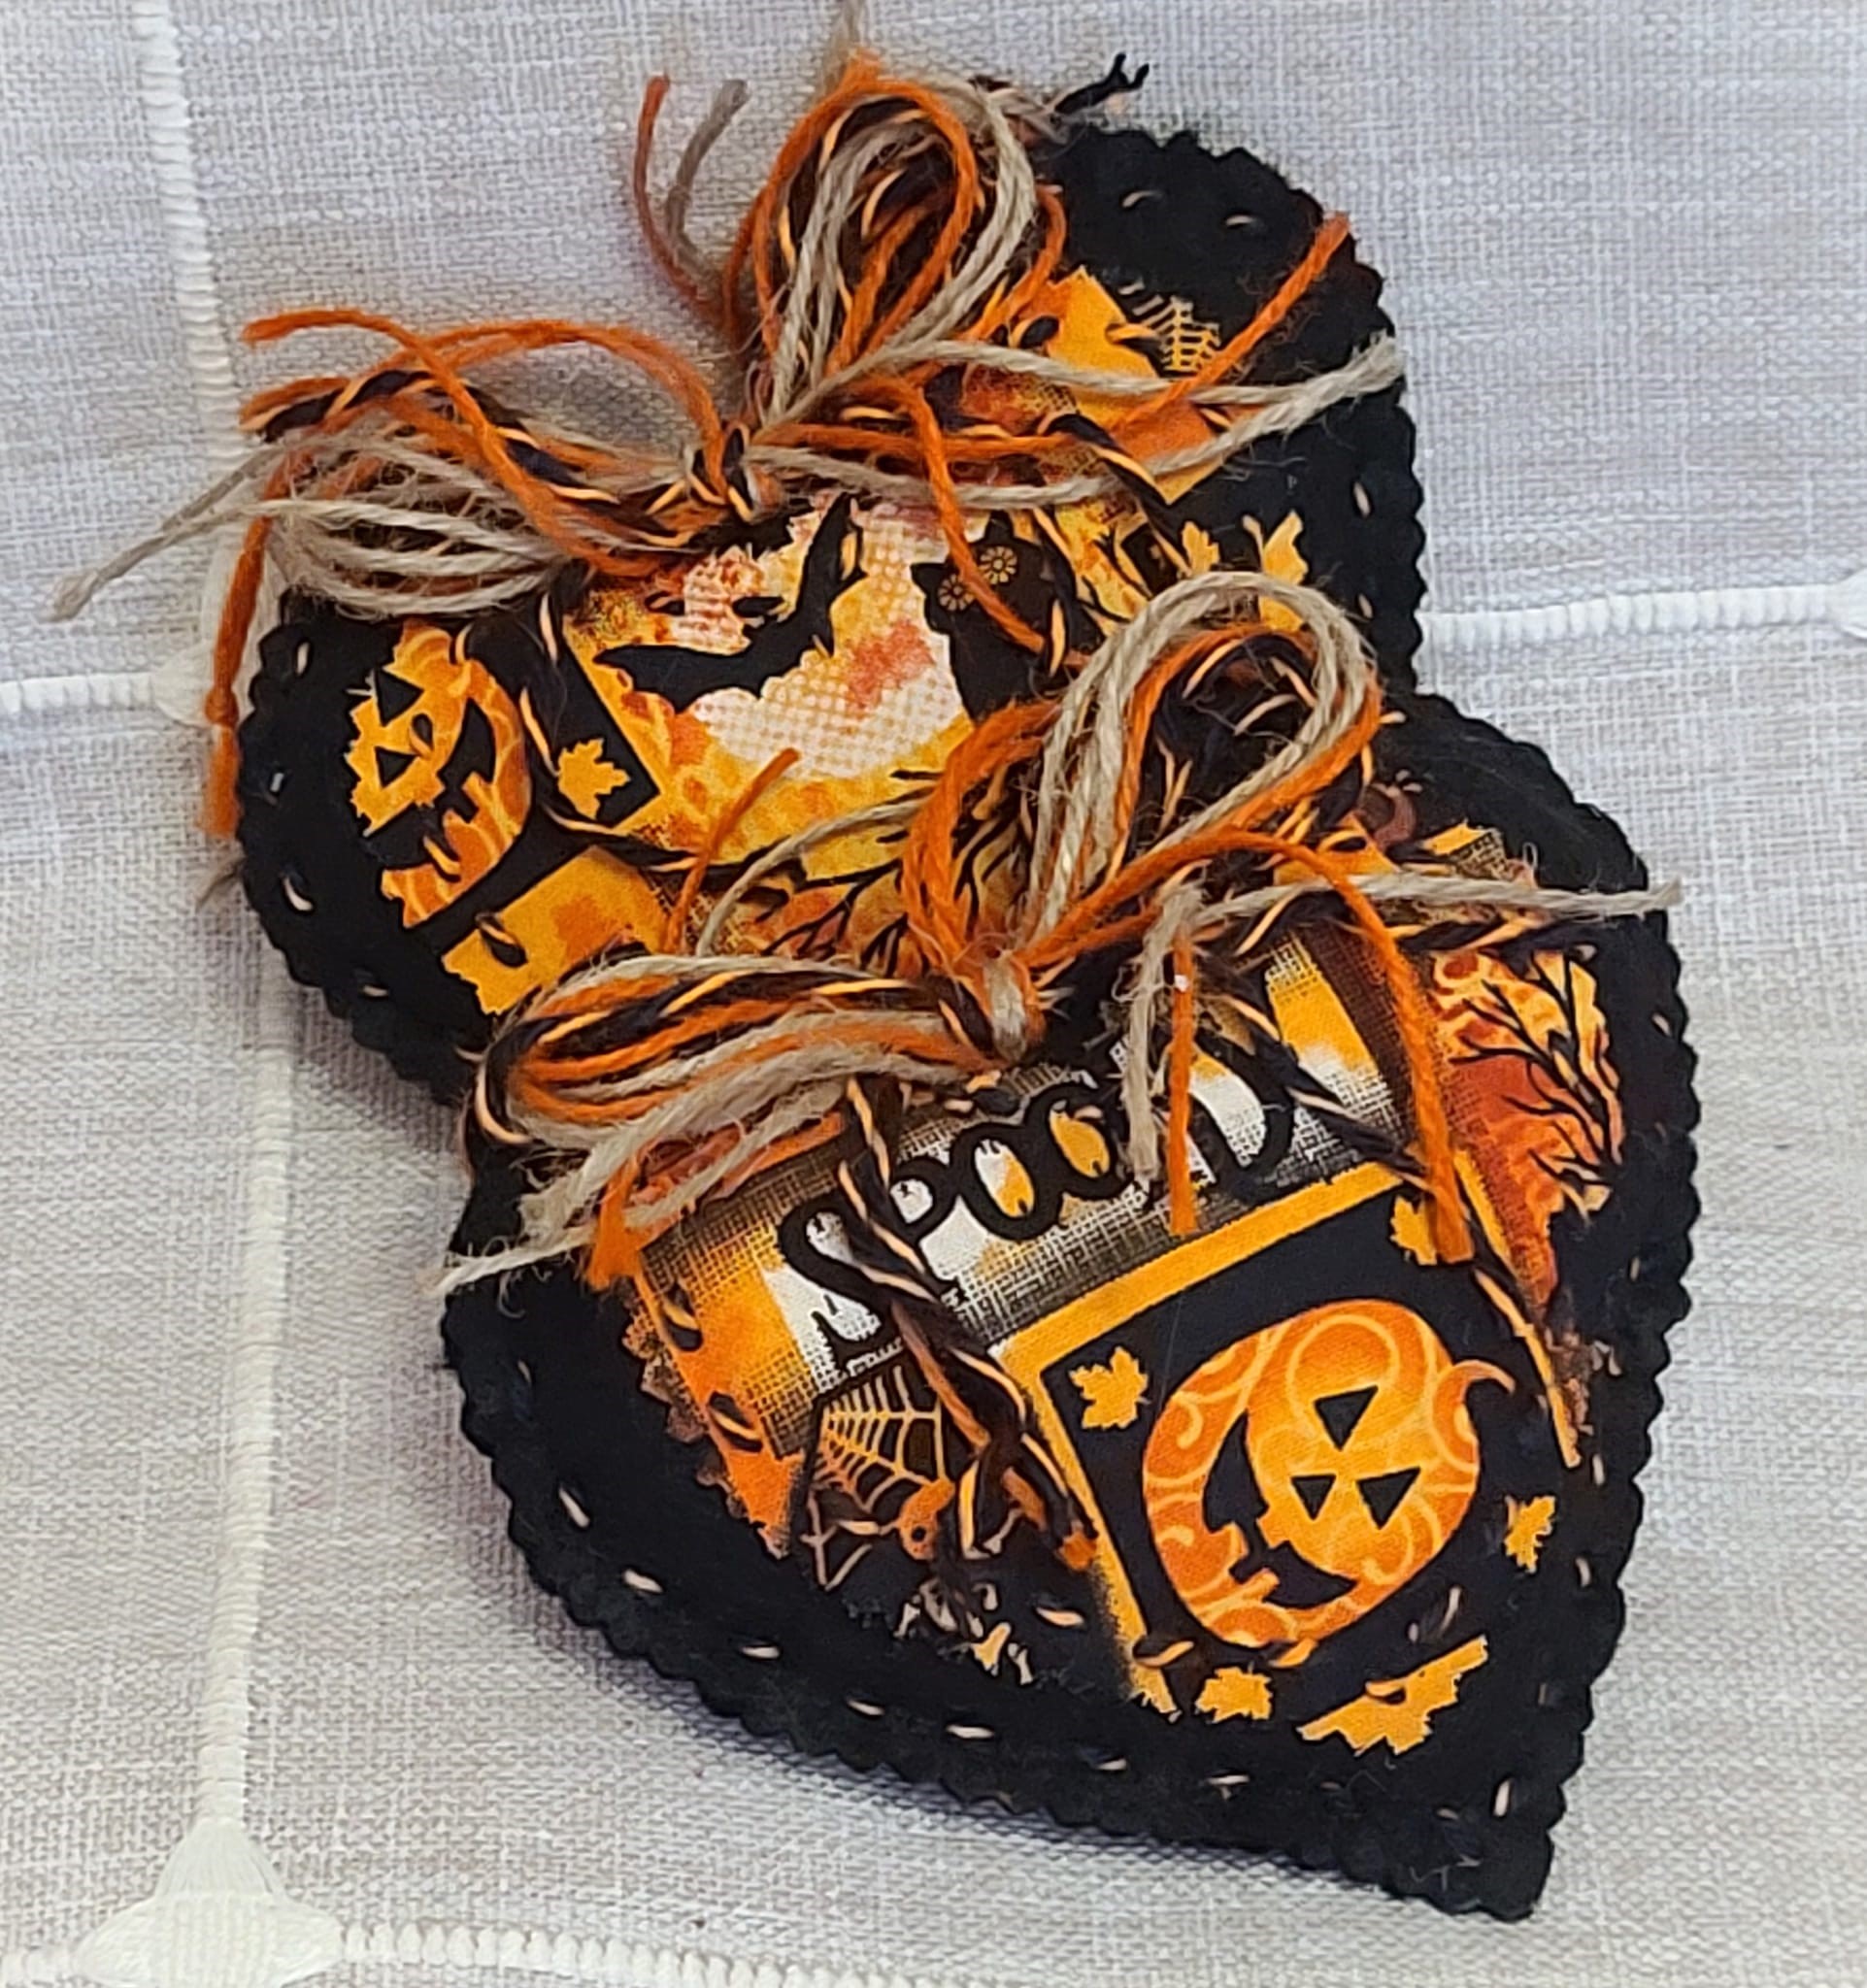 Halloweeen fabric and felt heart ornament -SPOOKY